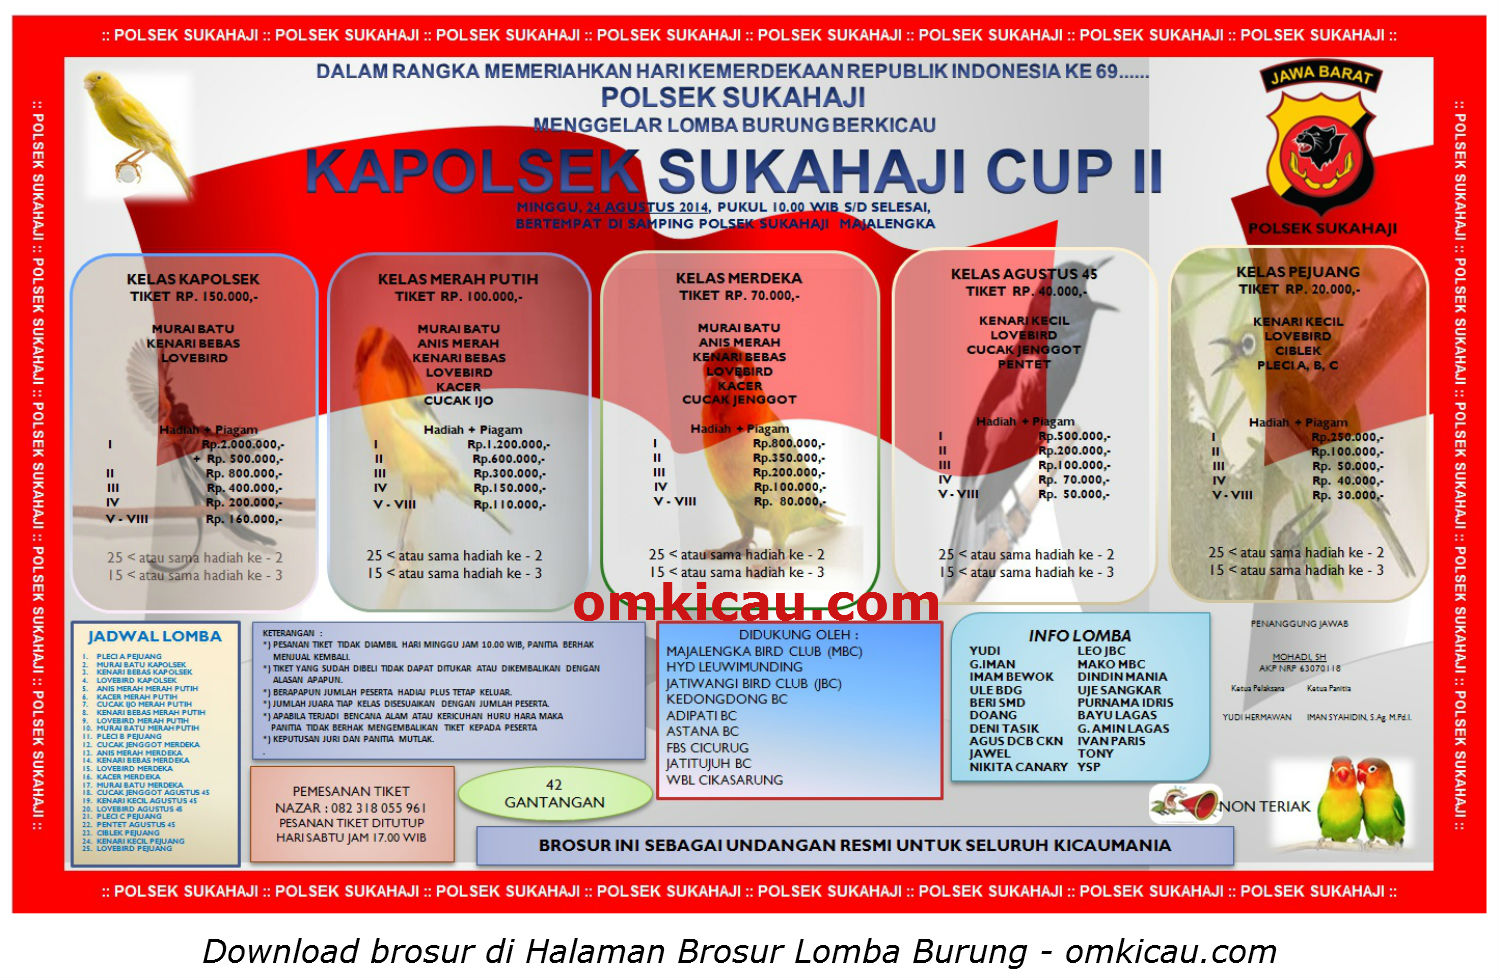 Brosur Lomba Burung Berkicau Kapolsek Sukahaji Cup II, Majalengka, 24 Agustus 2014